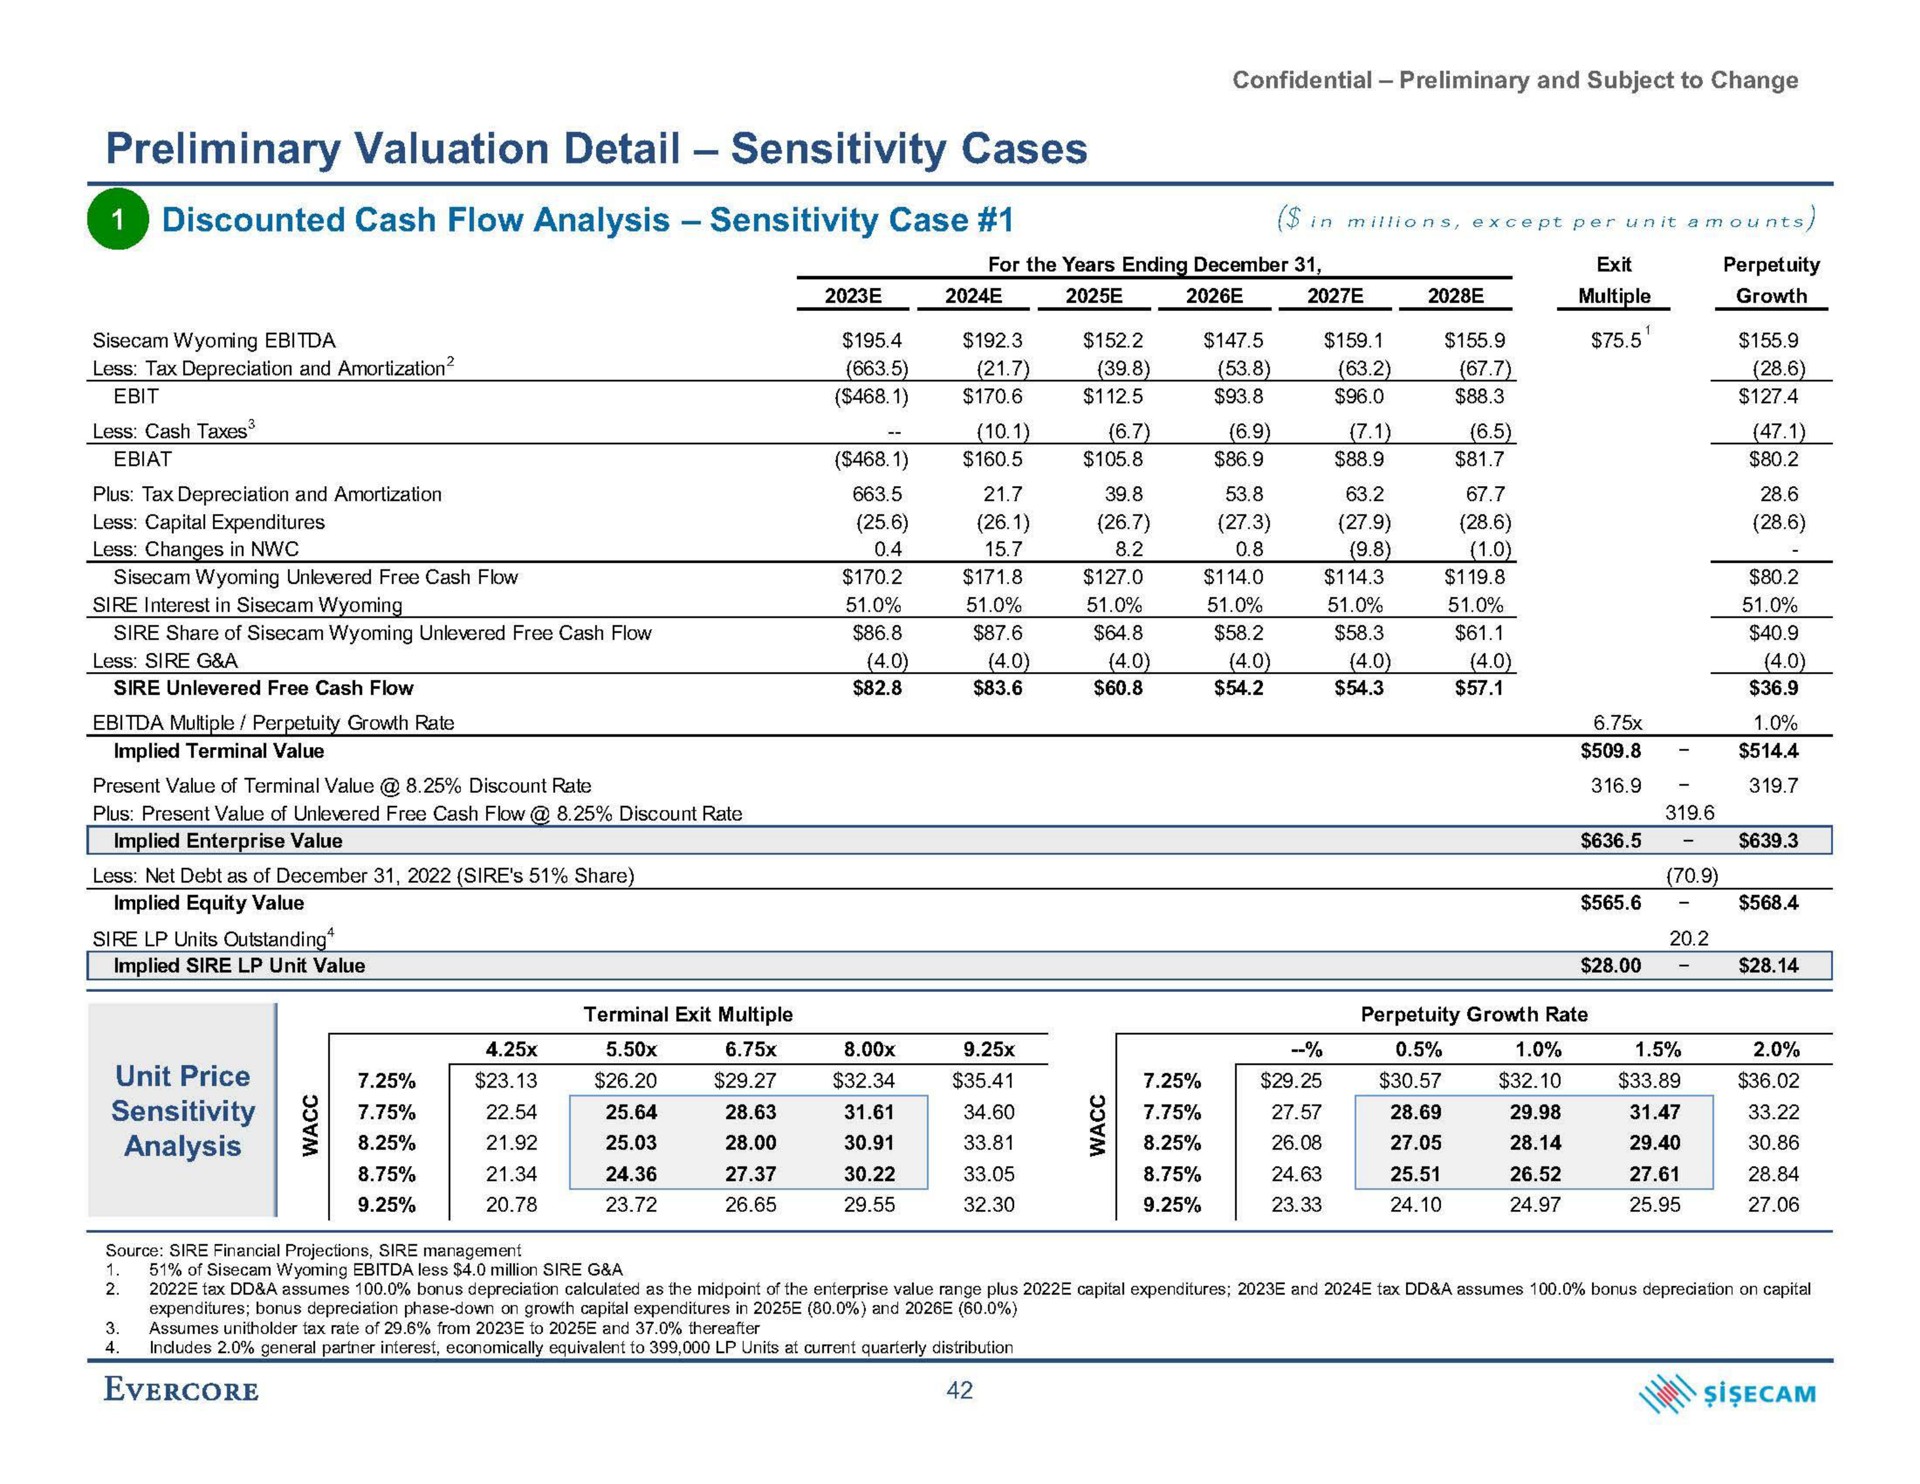 preliminary valuation detail sensitivity cases discounted cash flow analysis sensitivity case in except per unit amounts | Evercore